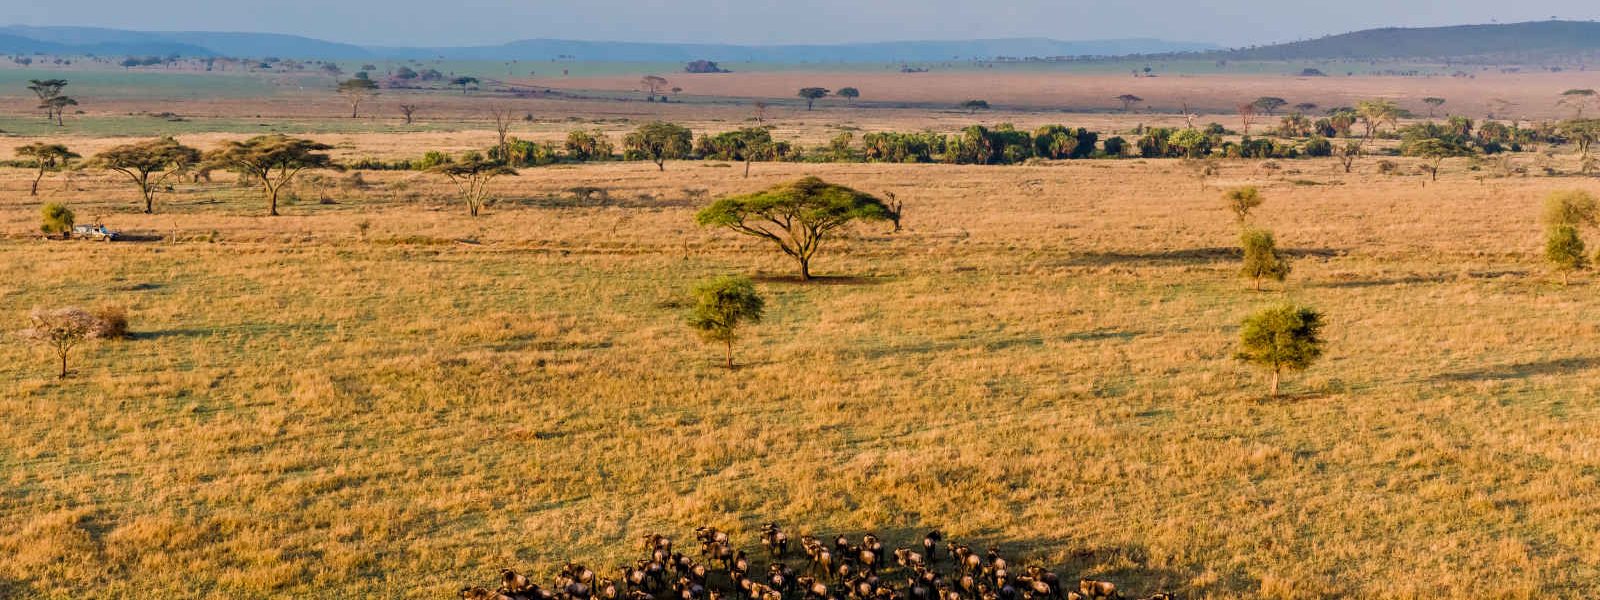 Troupeau de buffles dans la savane, Serengeti, Tanzanie